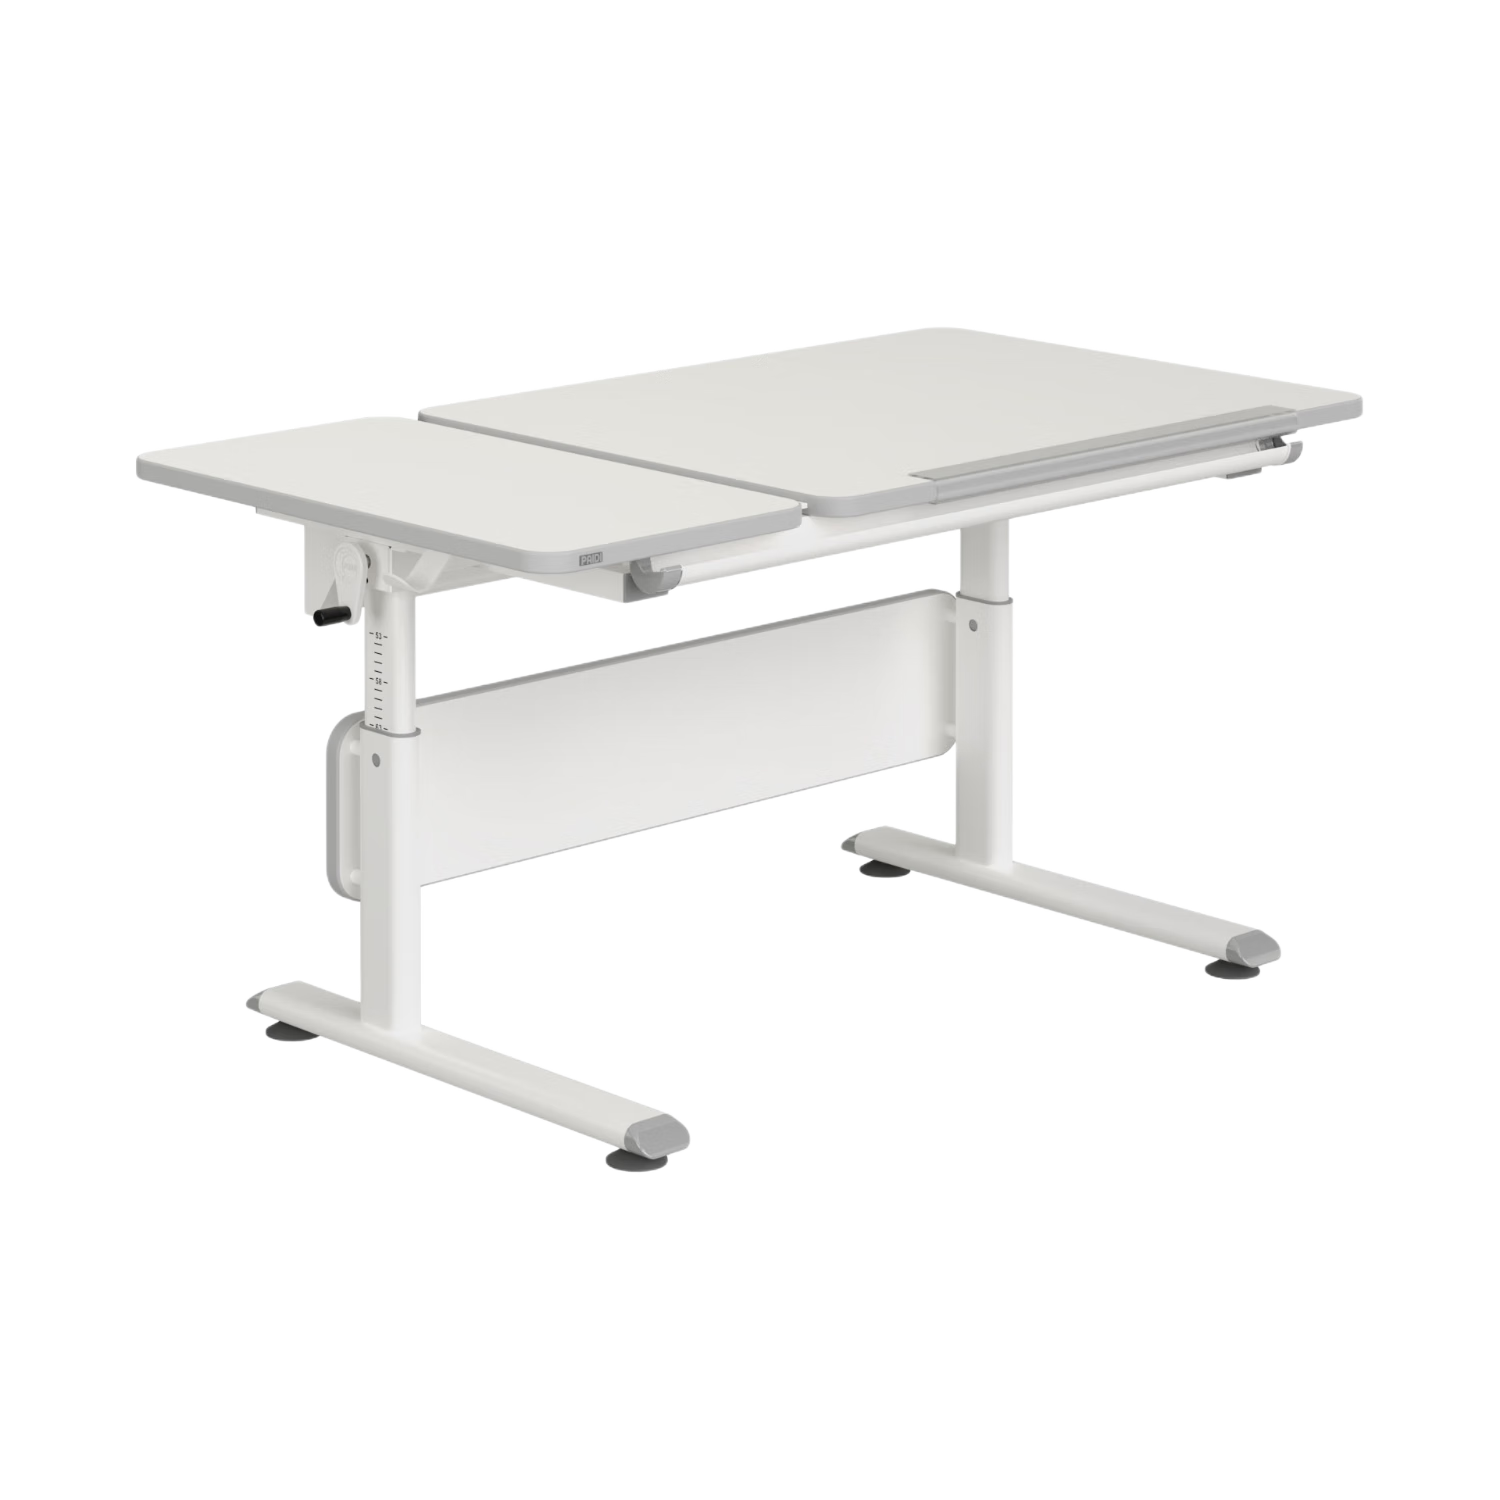 PAIDI德国儿童学习桌椅套装DIEGO GT系列家用小学生写字桌书桌学习桌椅 单桌-白色-含基础抽屉